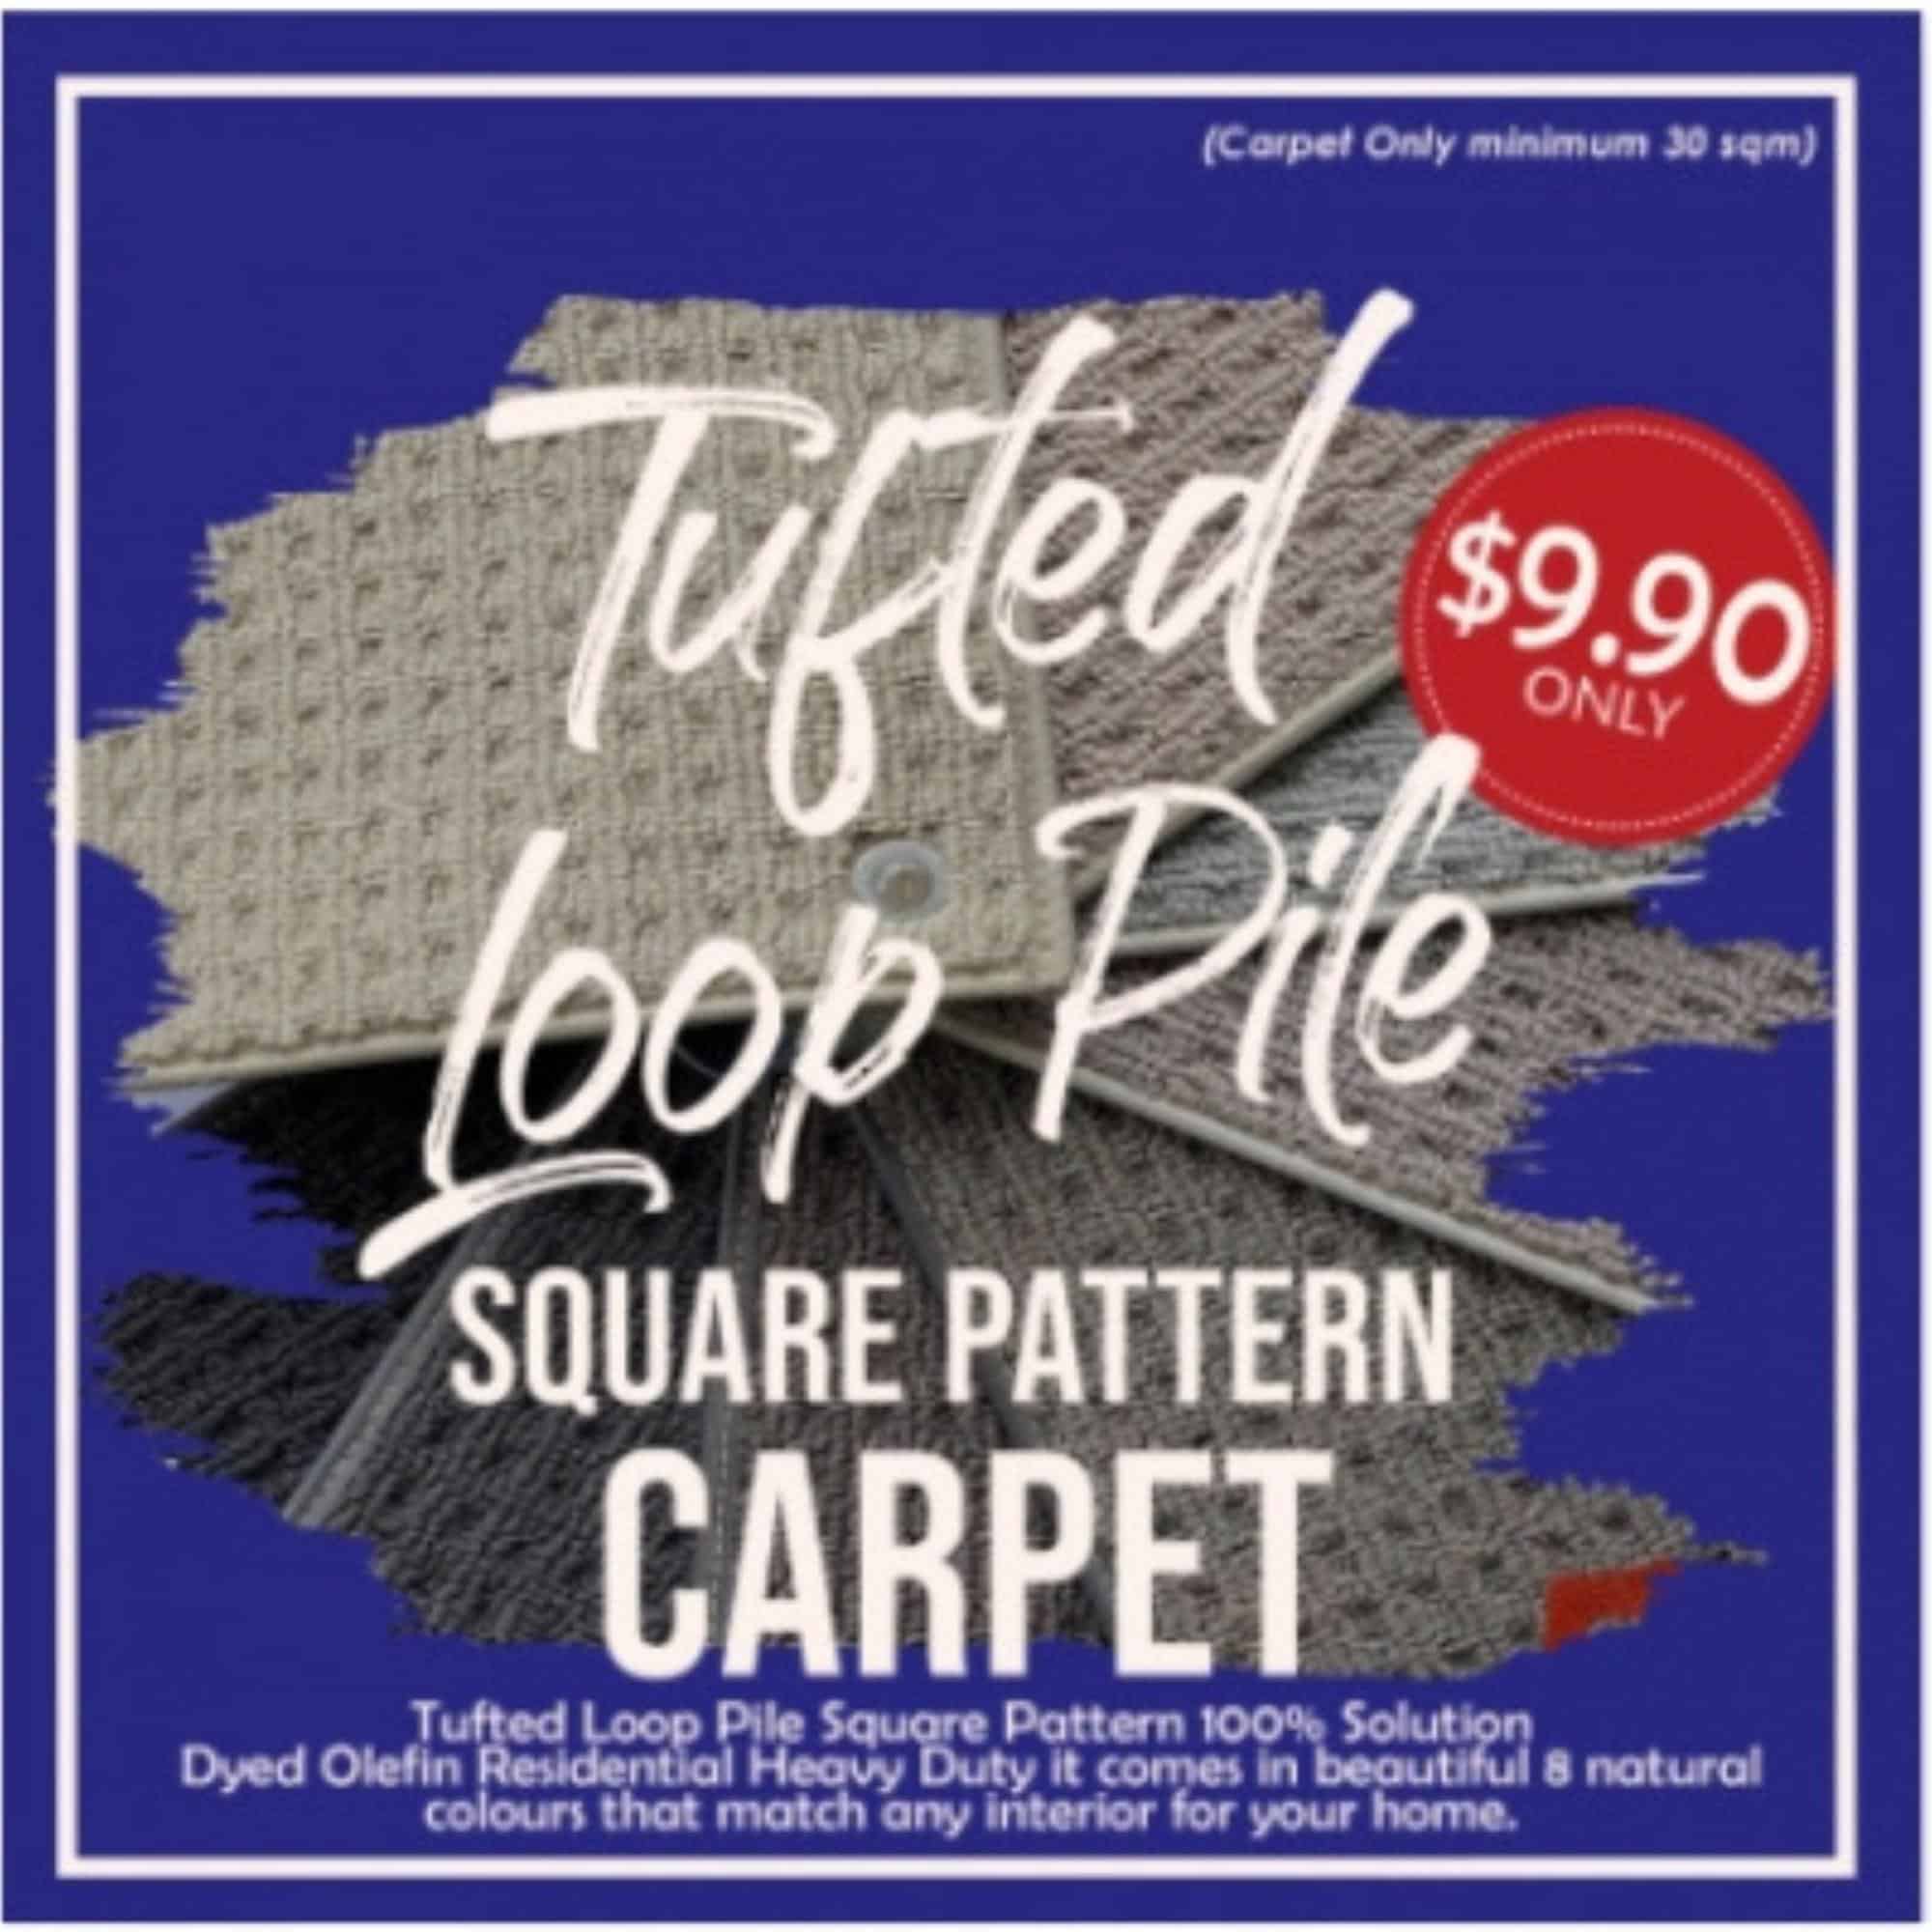 Image presents Laminate Flooring and Tufted Loop Pile